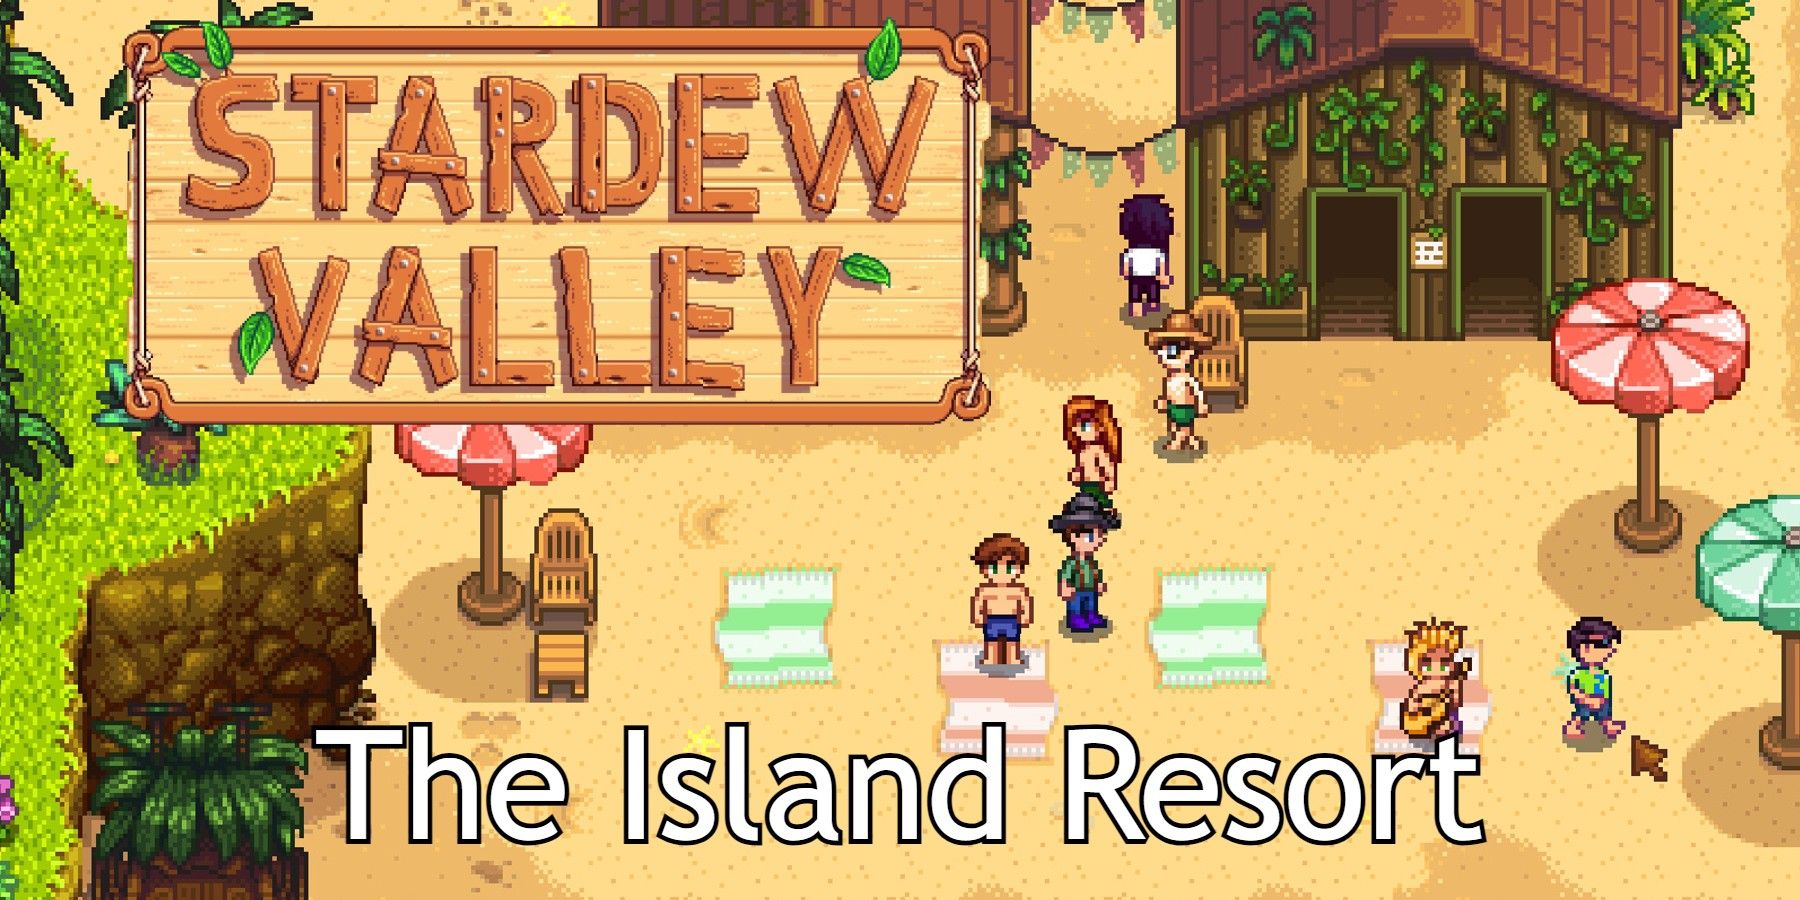 stardew valley island resort and title